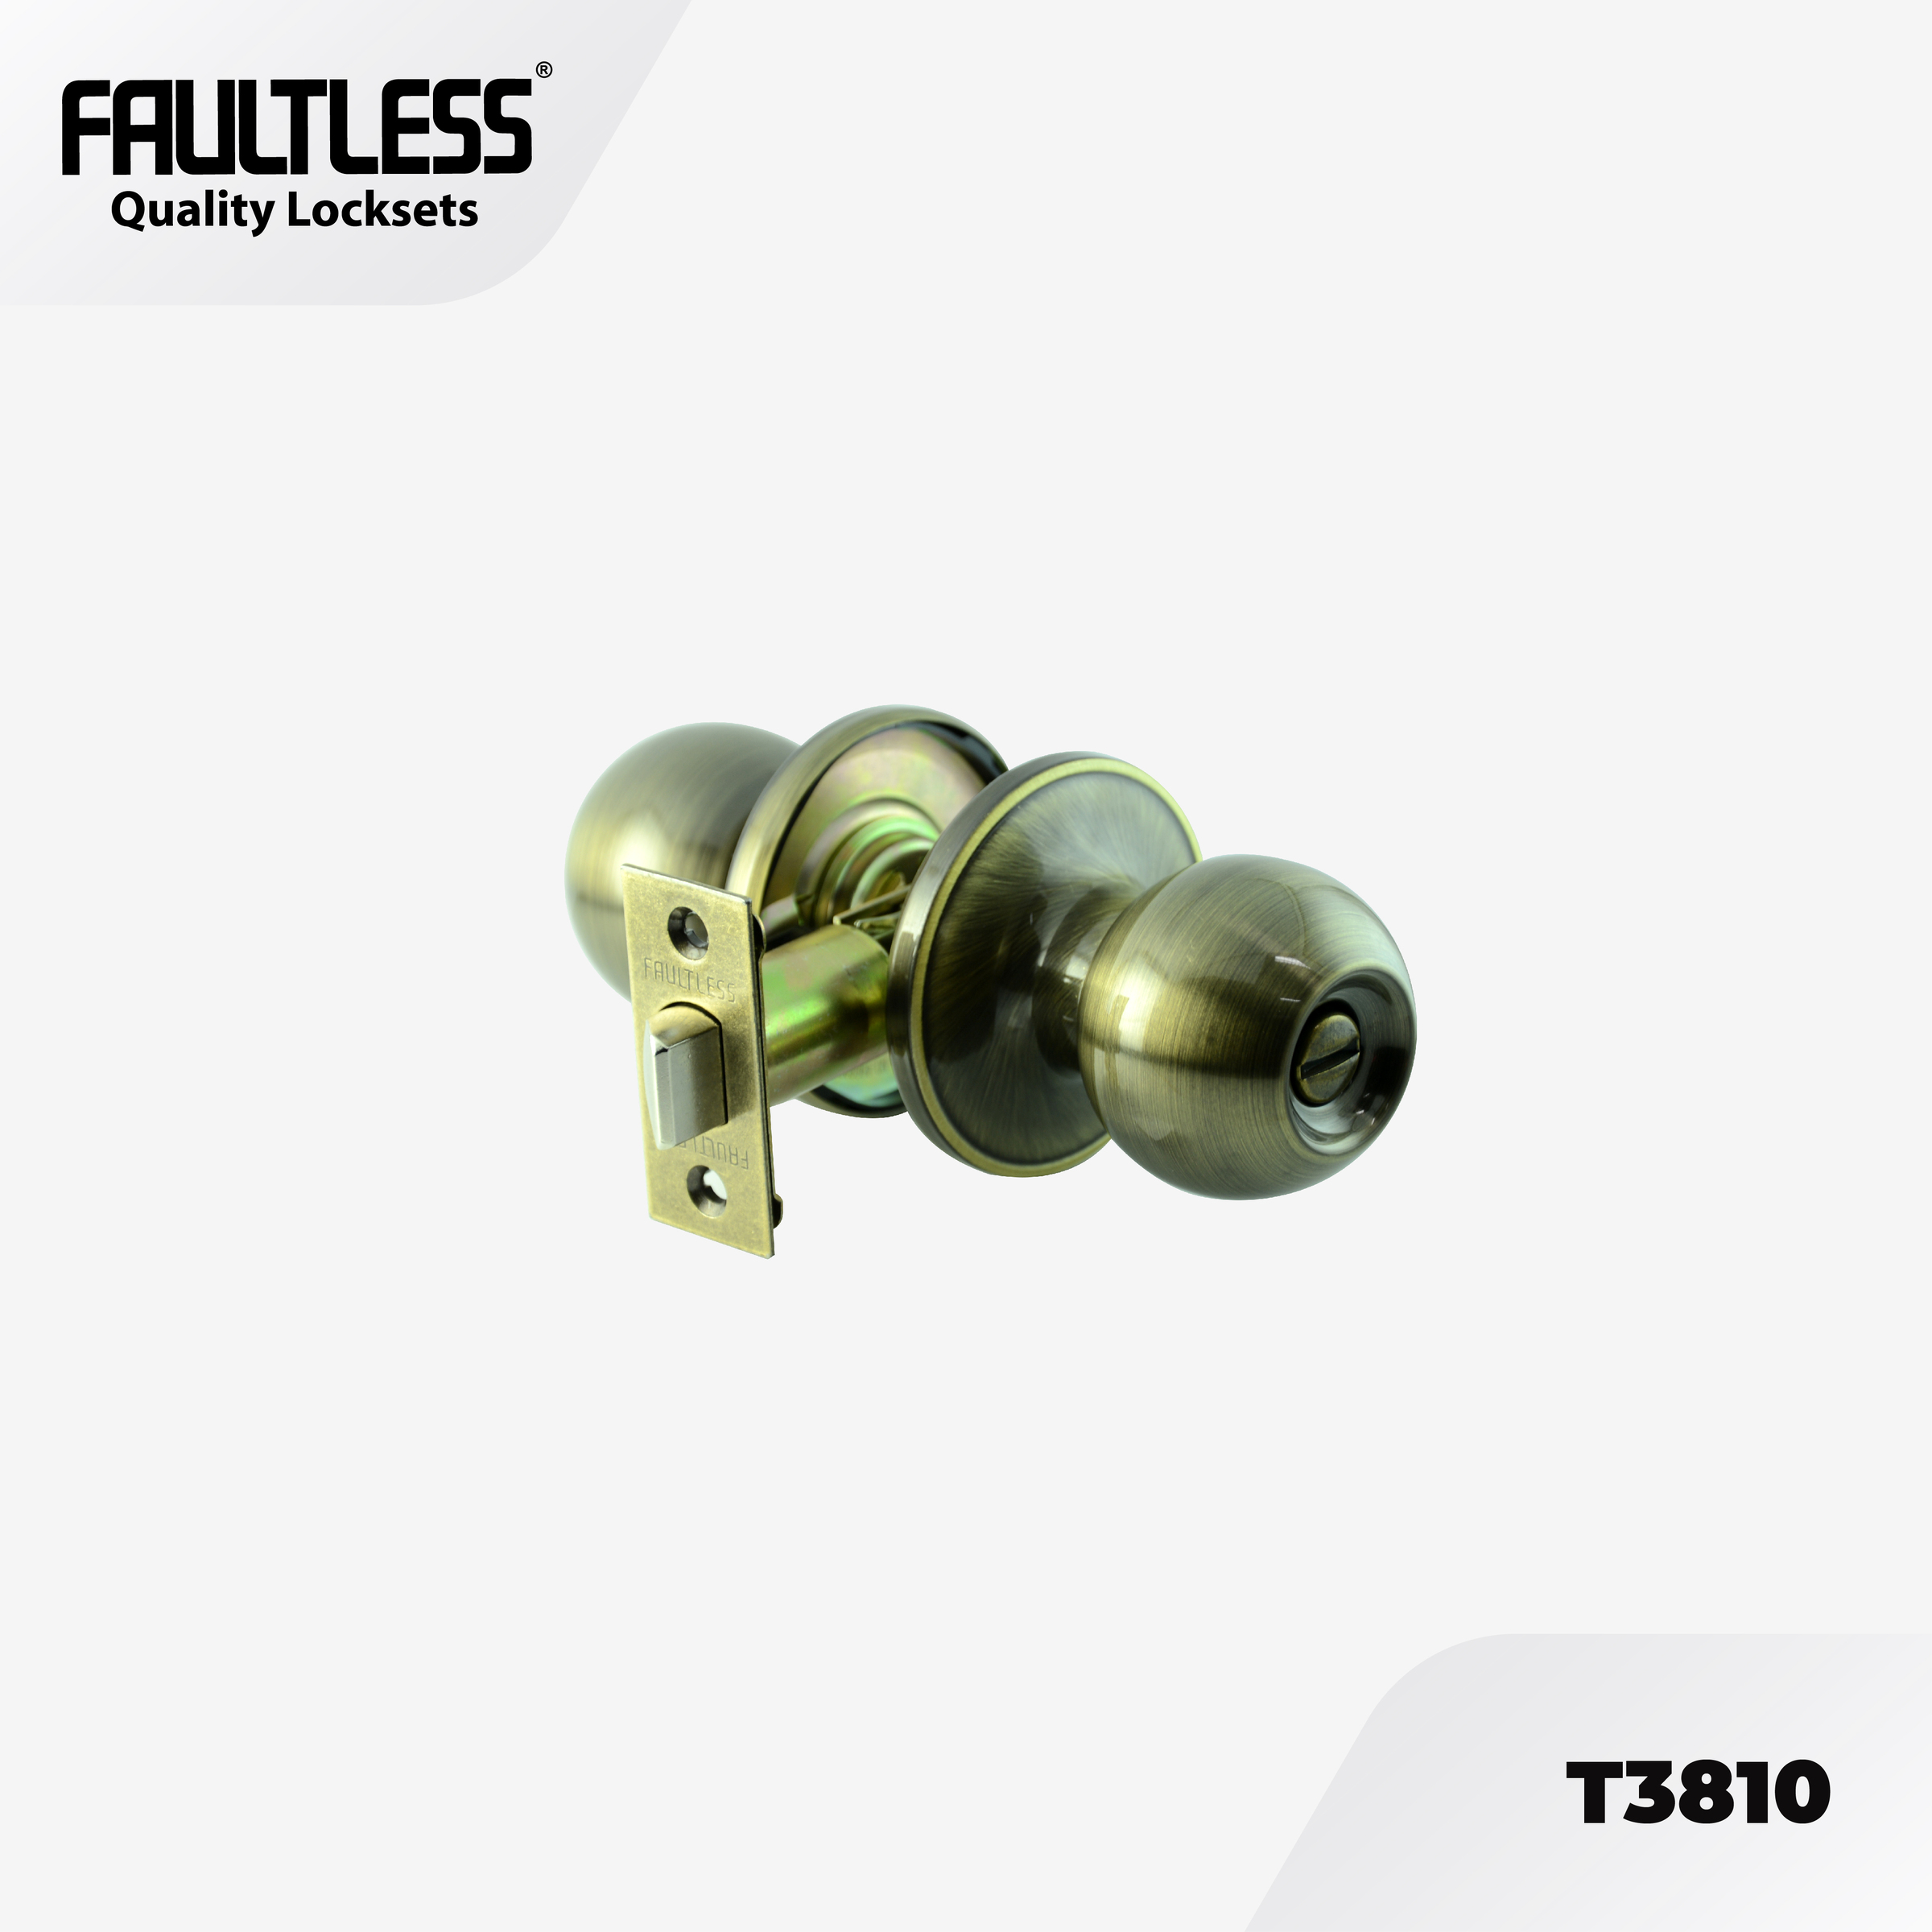 Faultless Knobset T3810